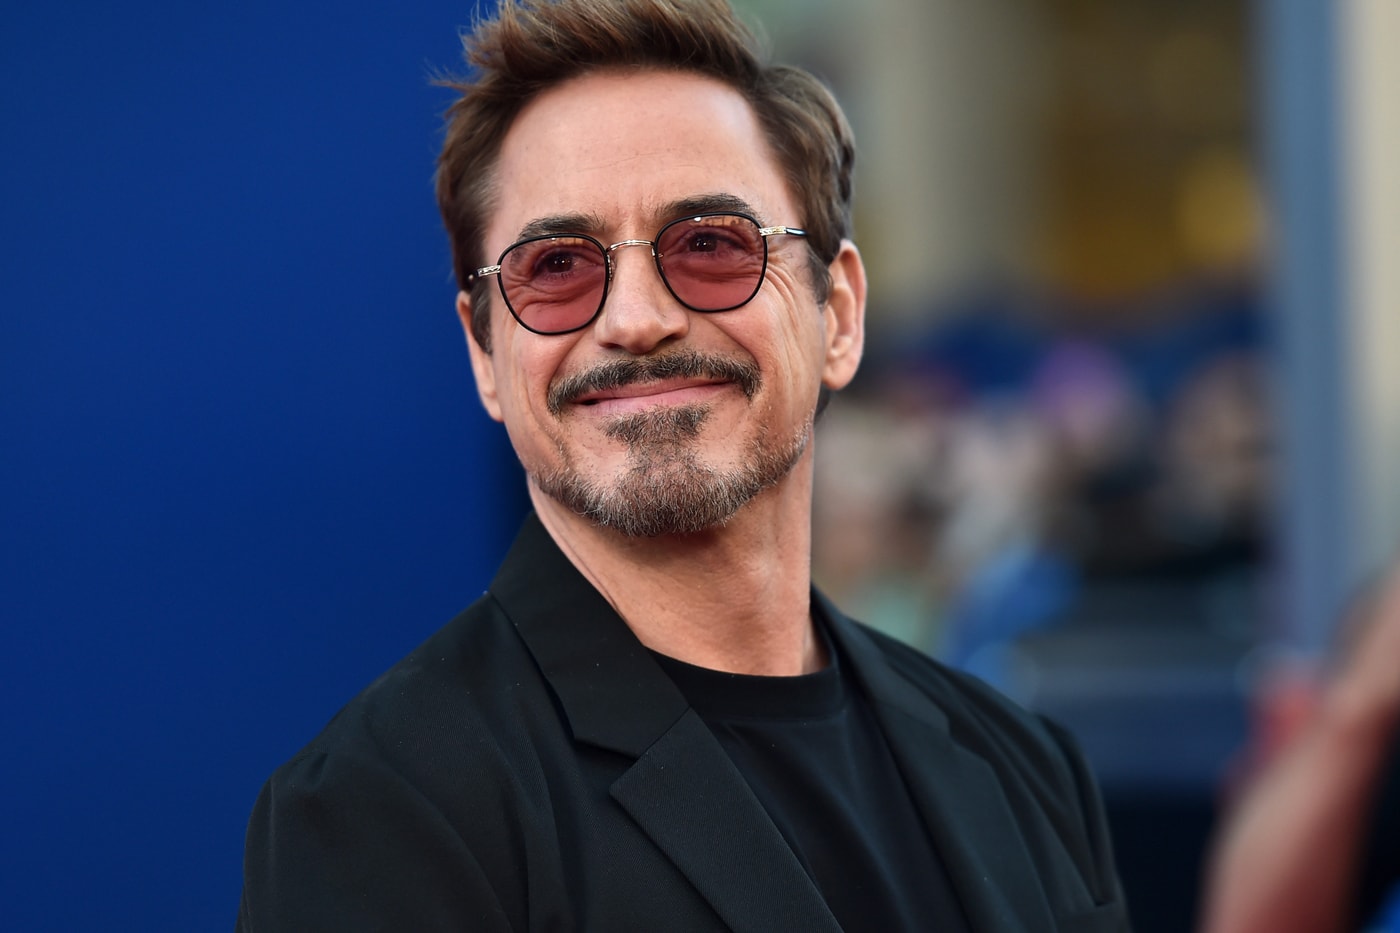 Tony Stark Avengers: Endgame Cabin Airbnb Rental Marvel Studios Rober Downey Jr Iron Man 